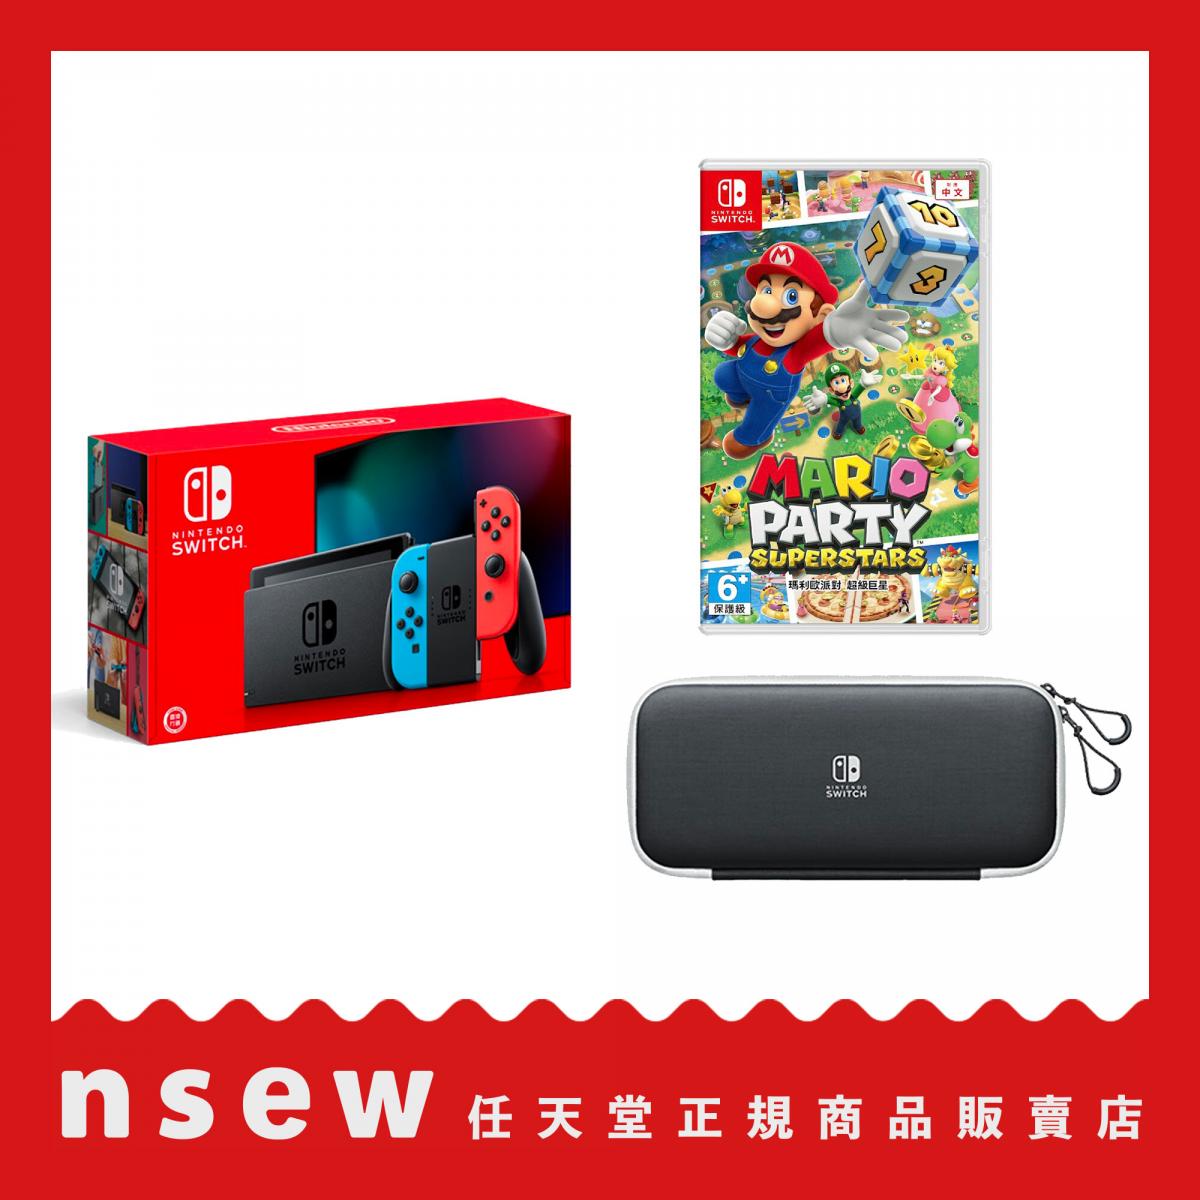 Nintendo Switch 電光藍 電光紅 + Nintendo Switch便攜包 （附螢幕保護貼）  + 瑪利歐派對 超級巨星